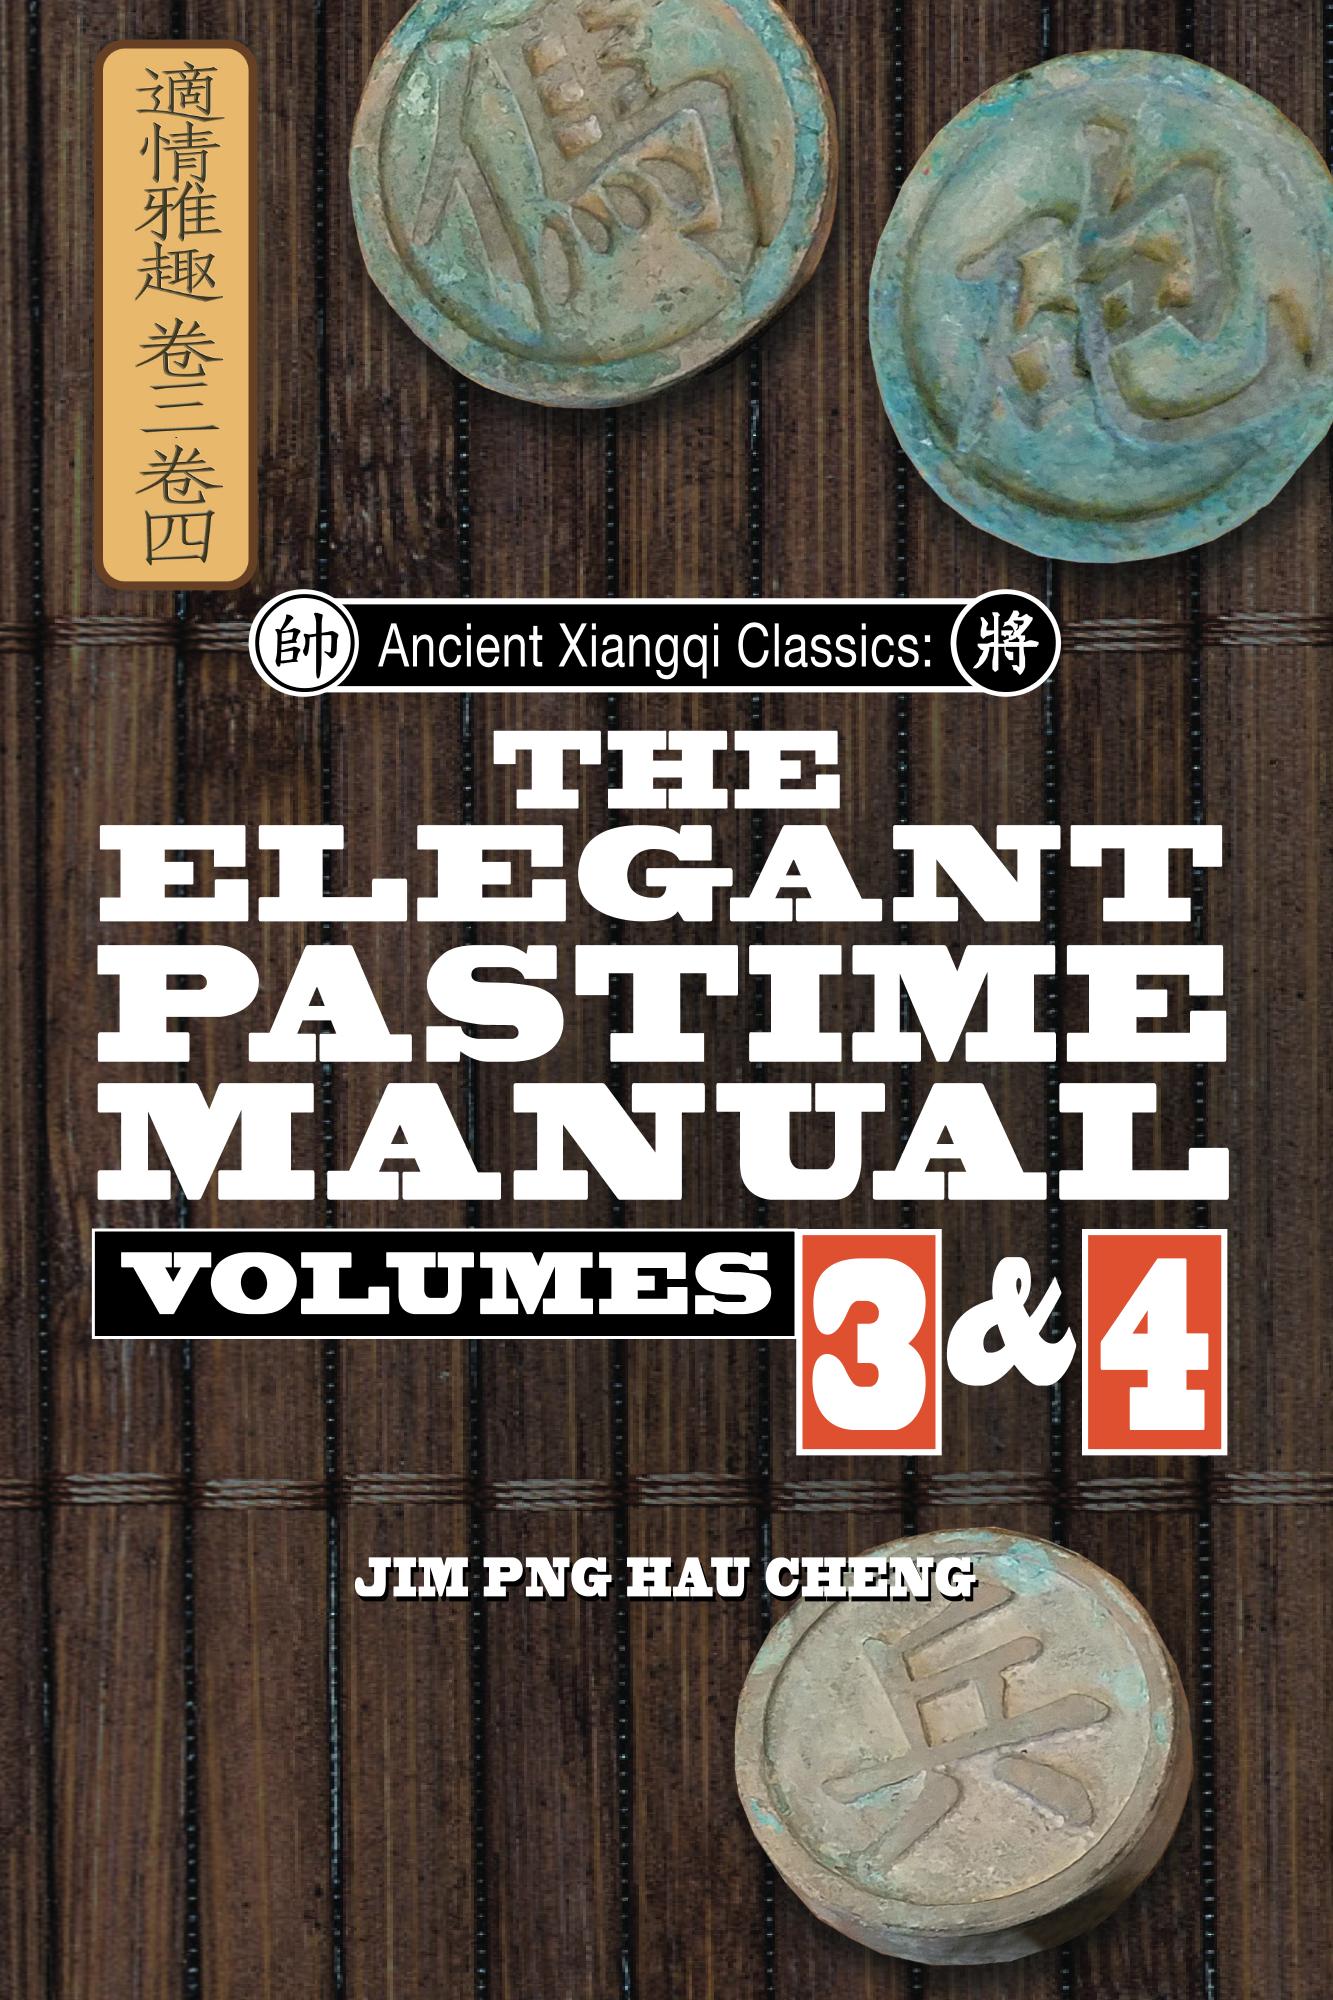 Ancient Xiangqi Classic: Elegant Pastime Manual